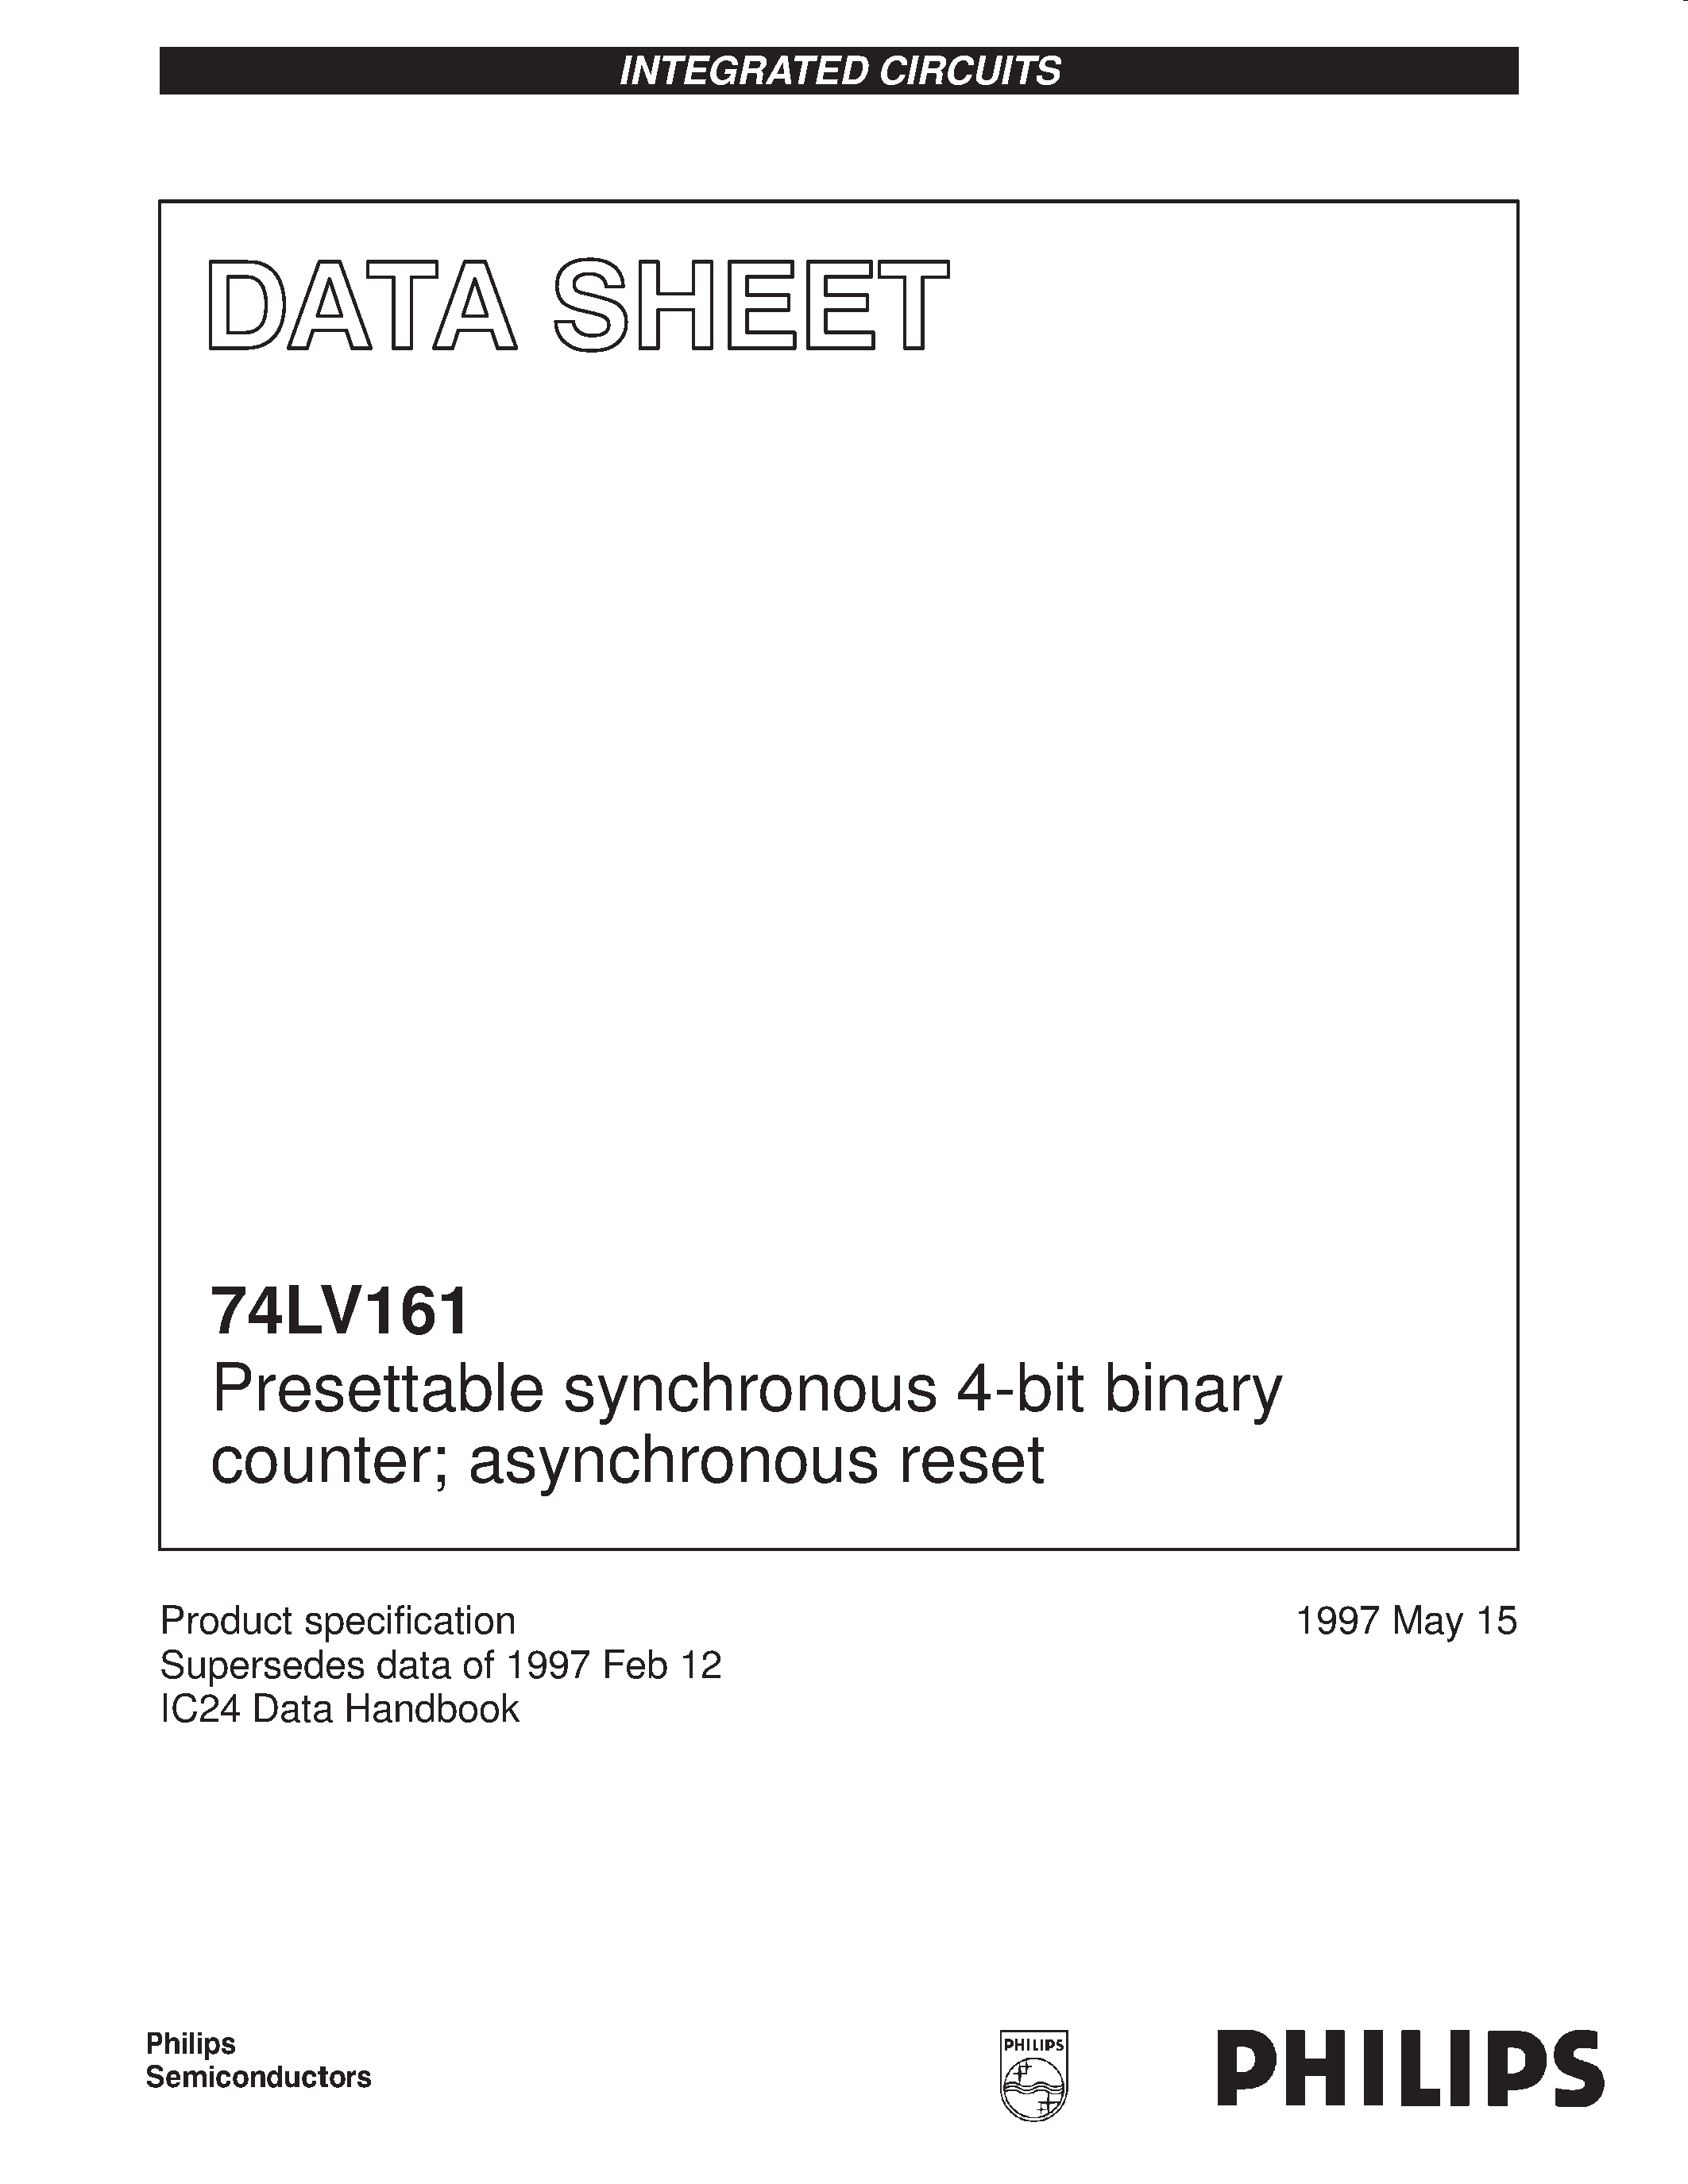 Даташит 74LV161 - Presettable synchronous 4-bit binary counter; asynchronous reset страница 1